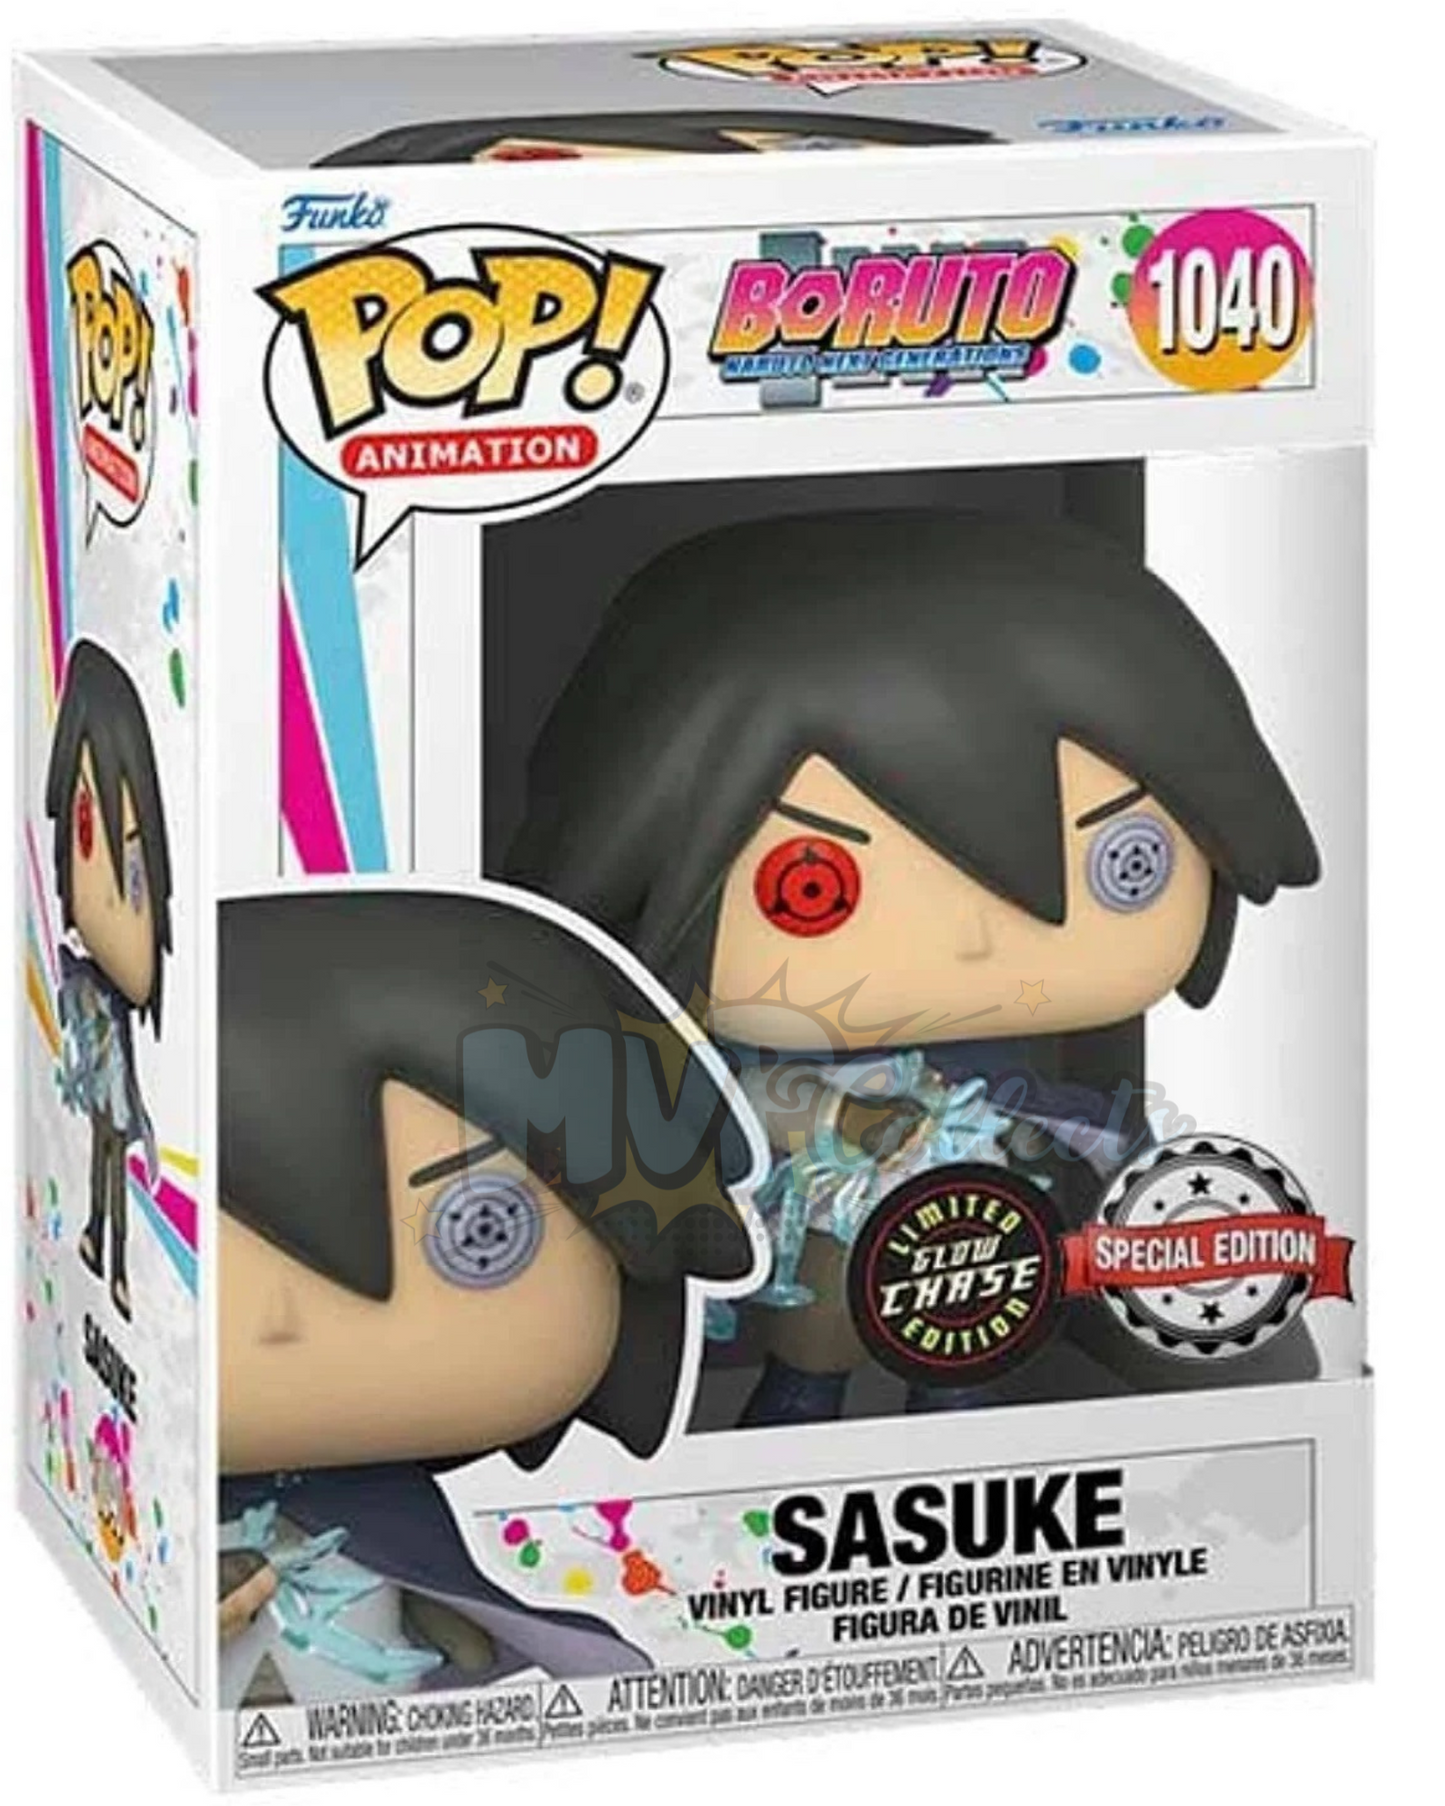 Sasuke POP! Chase Version (Boruto) 1040 SE